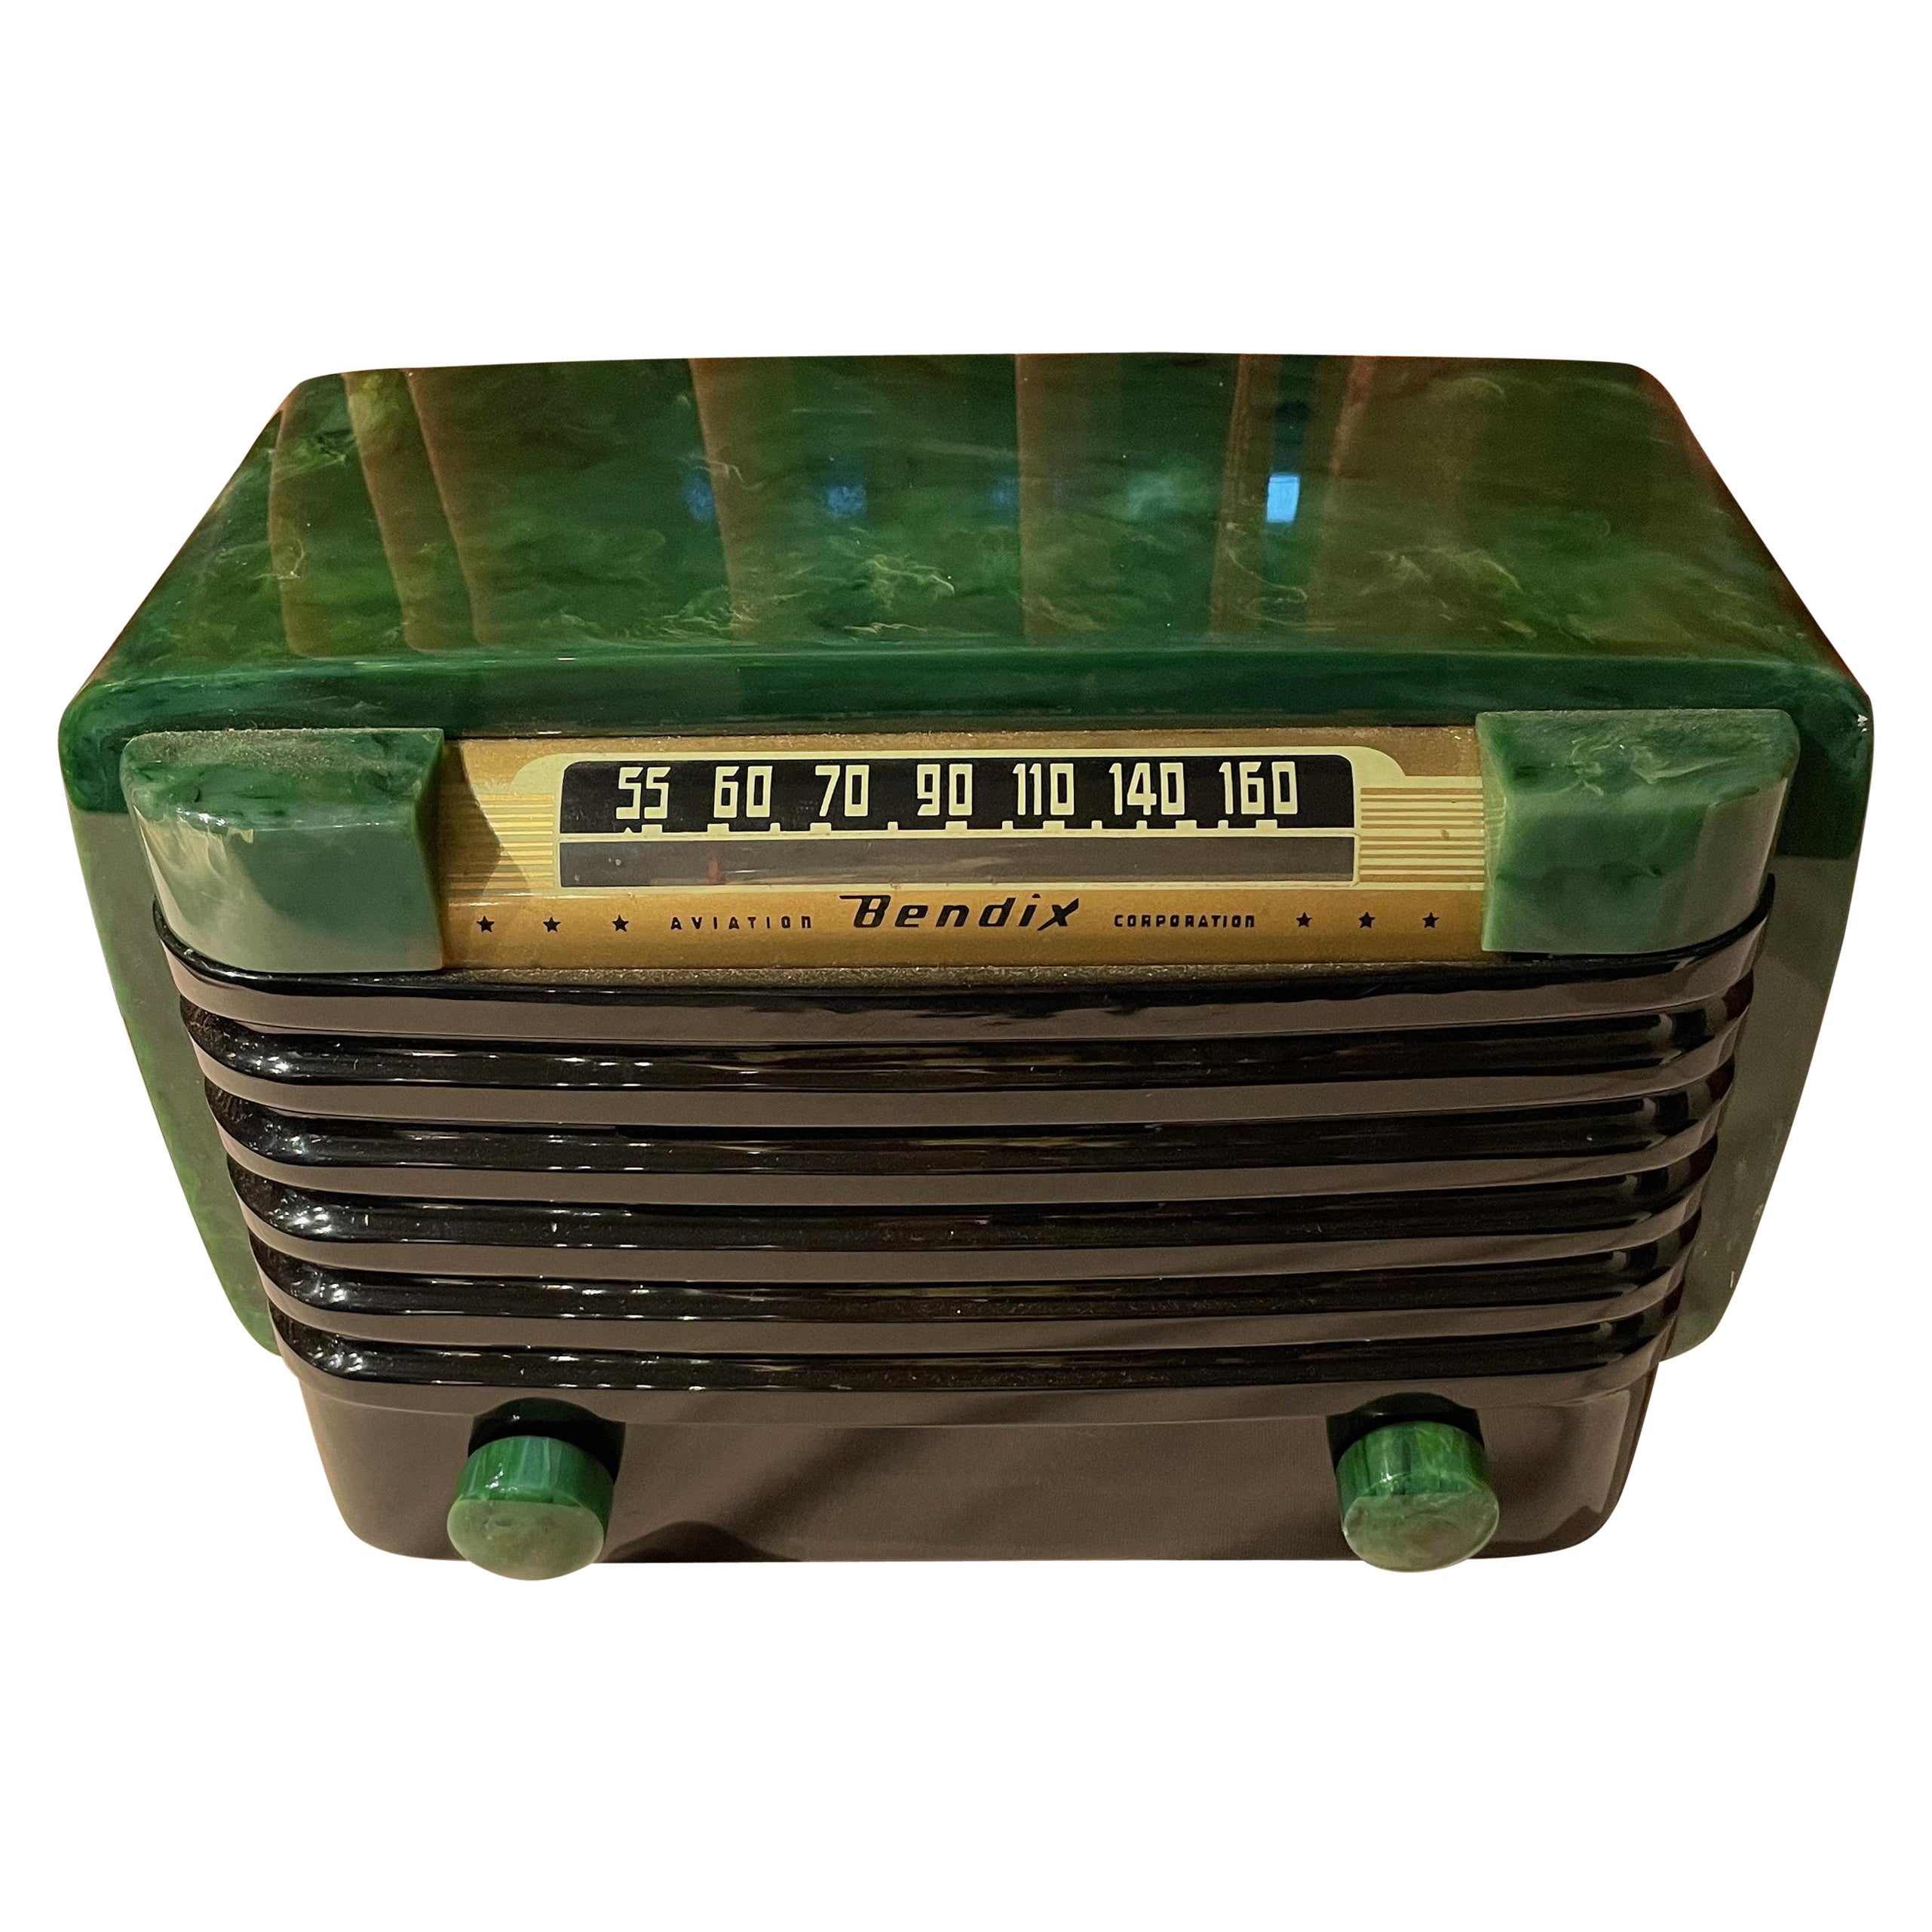 Bendix 526C Catalin Radio in Bright Jadeite Green wIntense Marbleizing Bluetooth